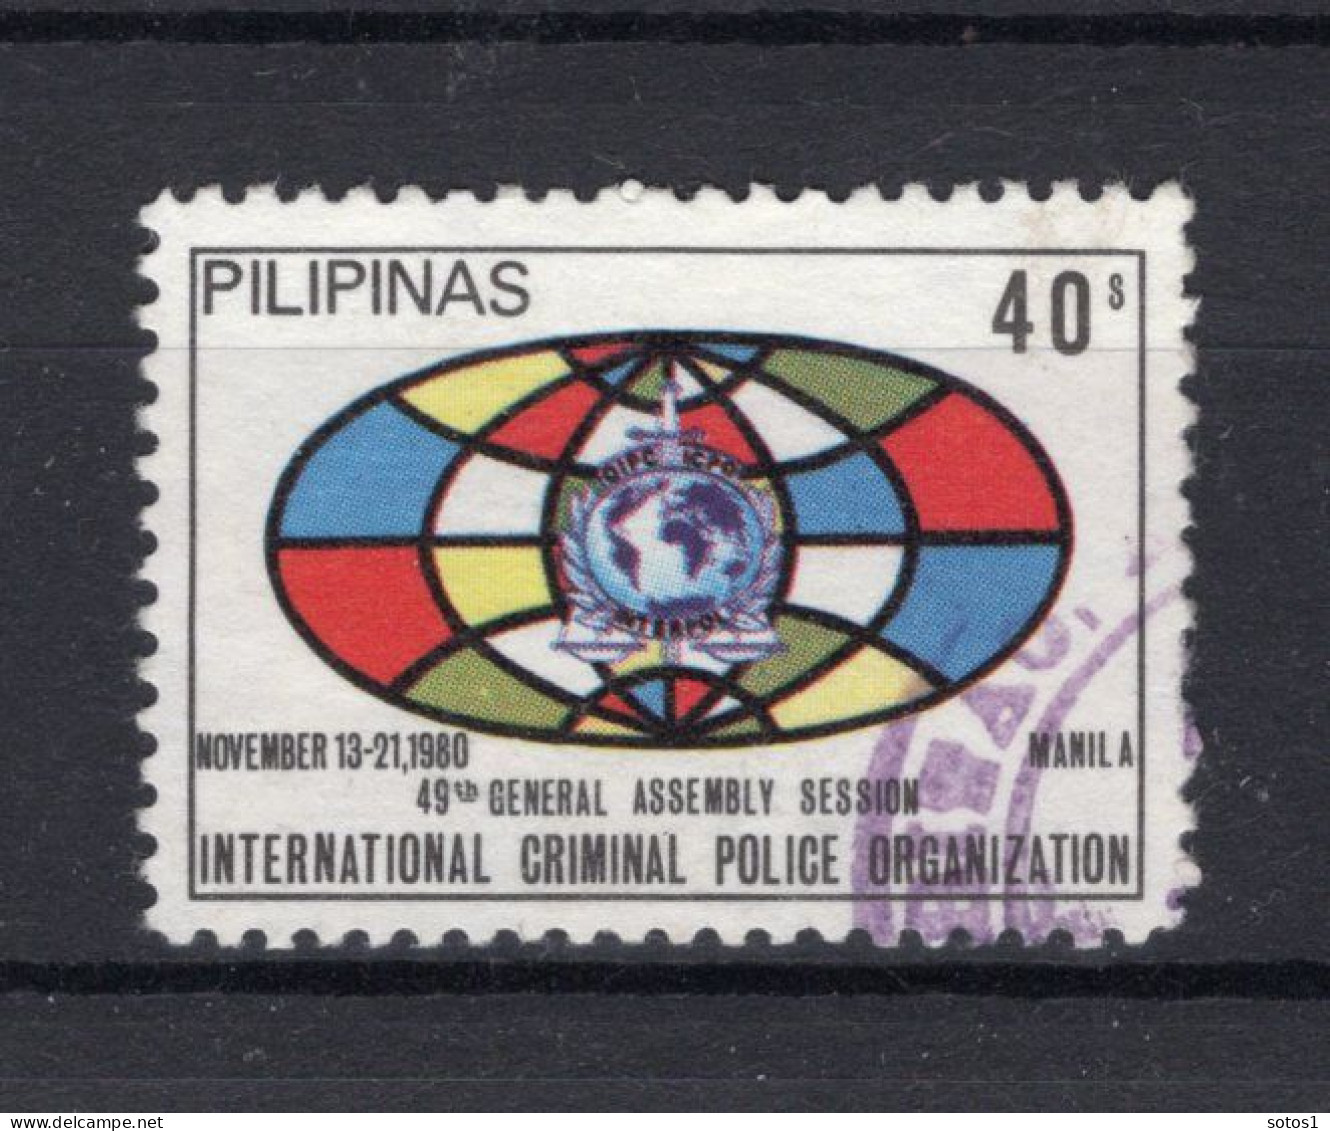 PHILIPPINES Yt. 1224° Gestempeld 1980 - Philippines